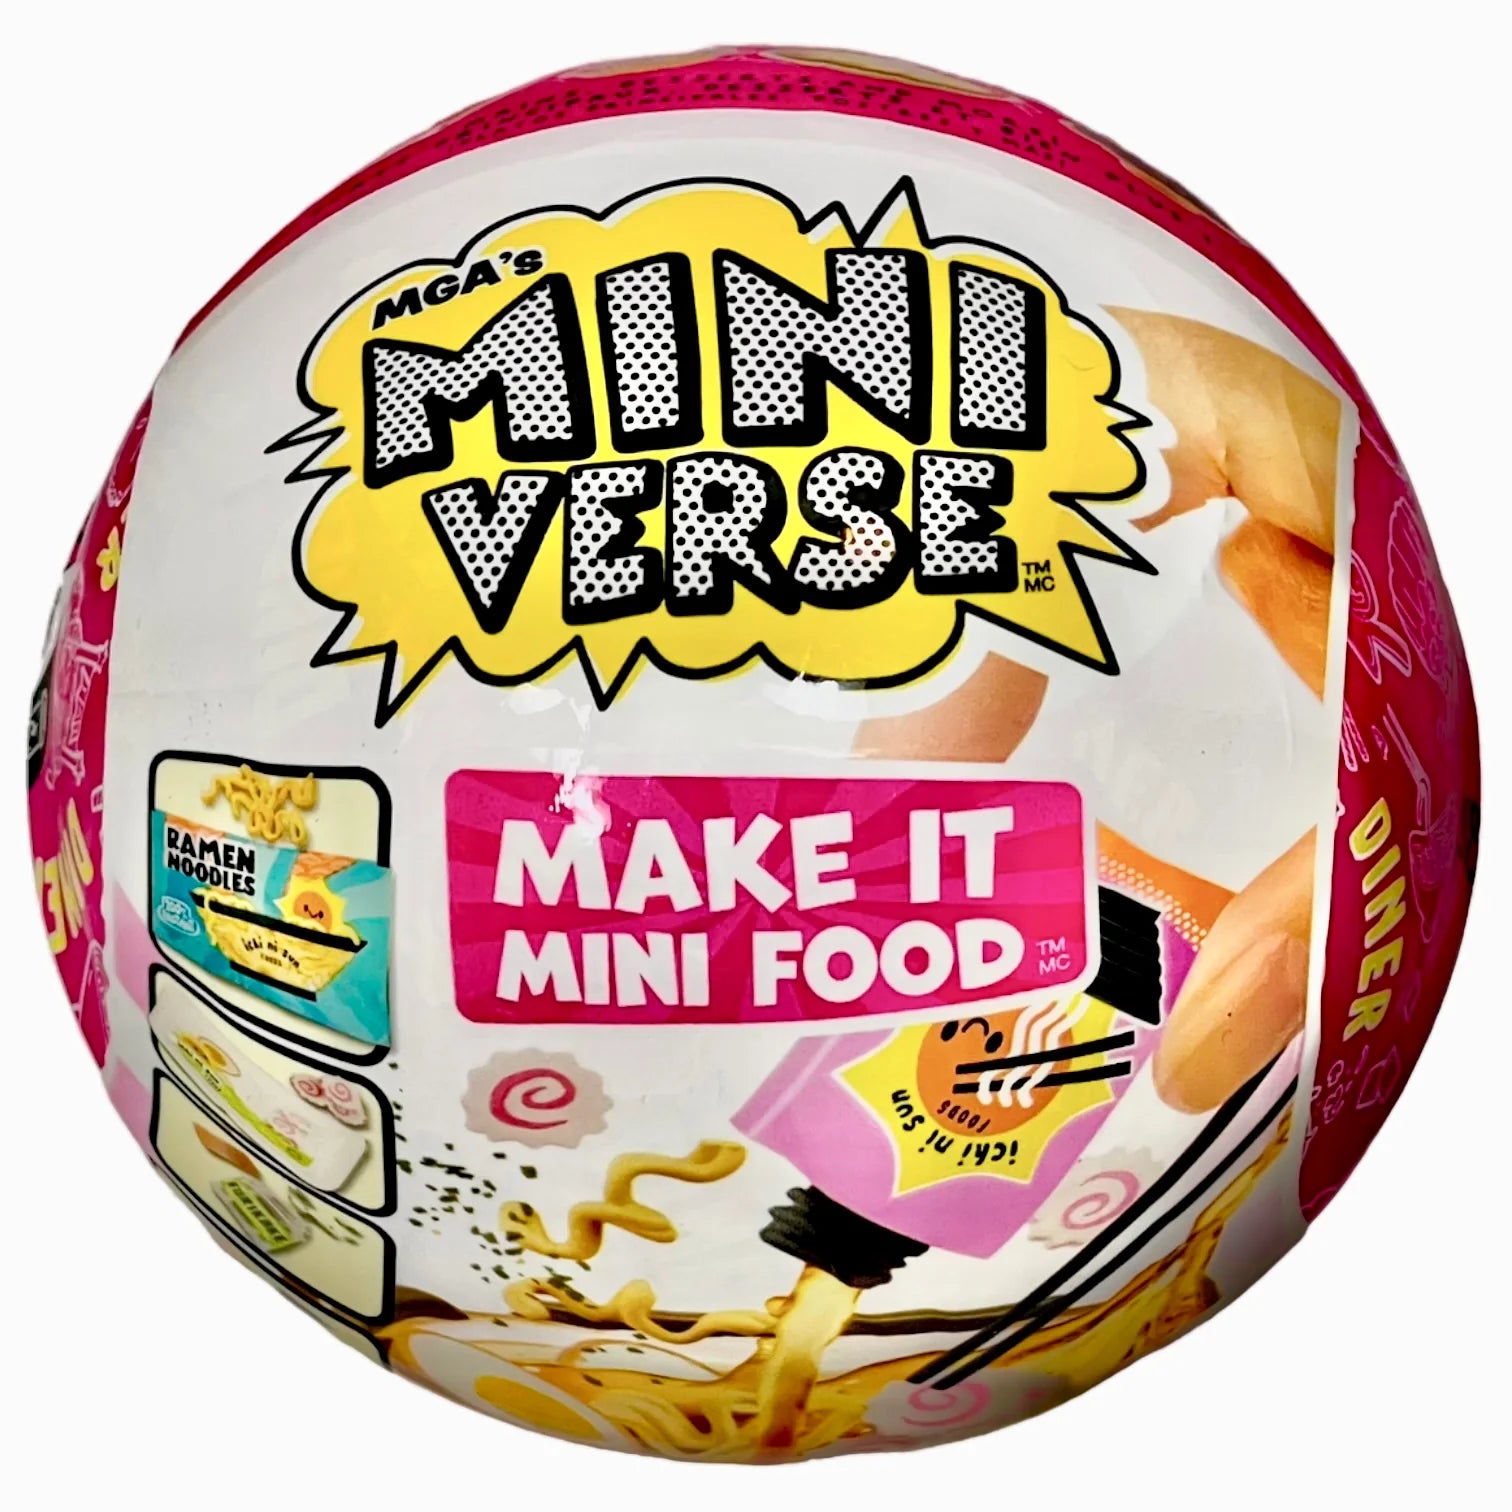 MINIVERSE MAKE IT MINI FOOD DINNER SERIES 1  BETTER THAN MINI BRANDS!!! by  MGA 